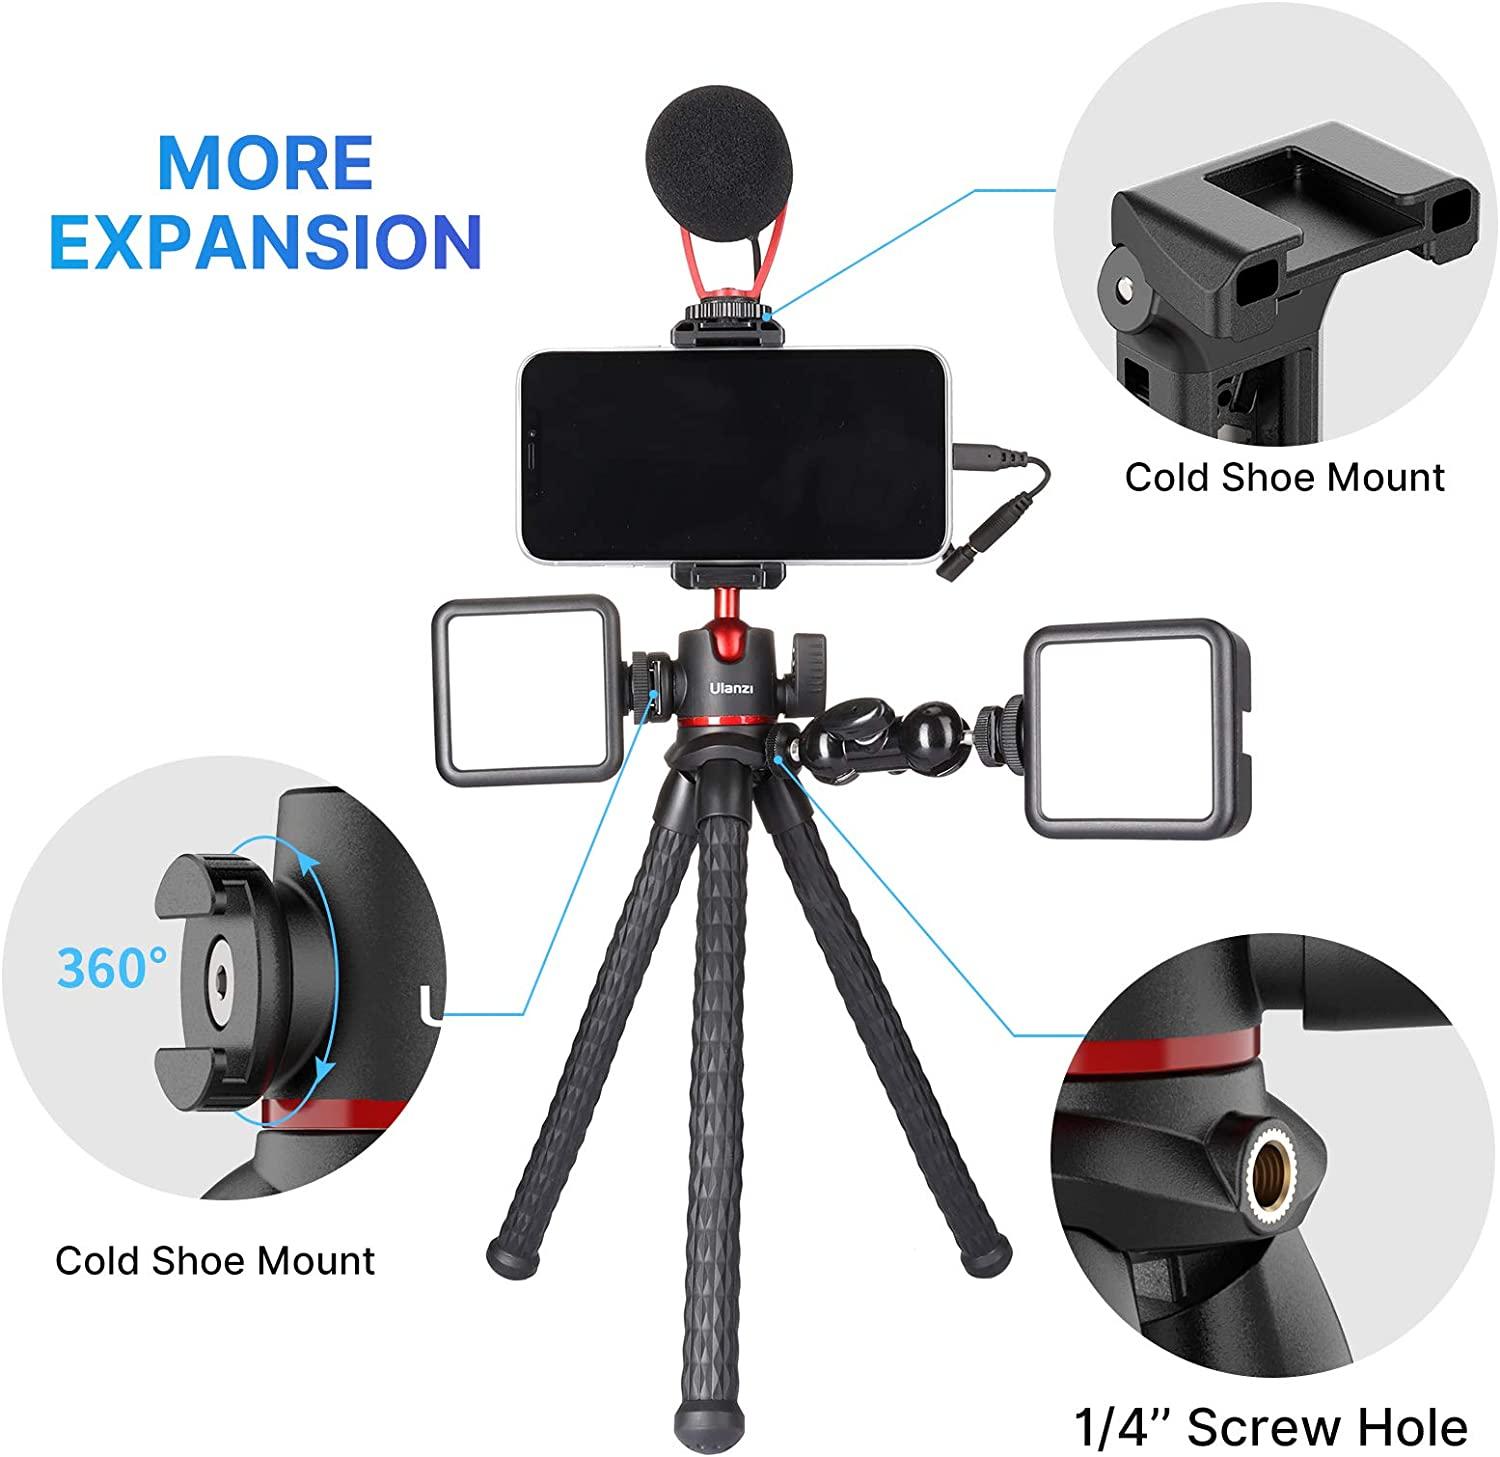 Vlog kit: Ulanzi table tripod, phone holder & microphone